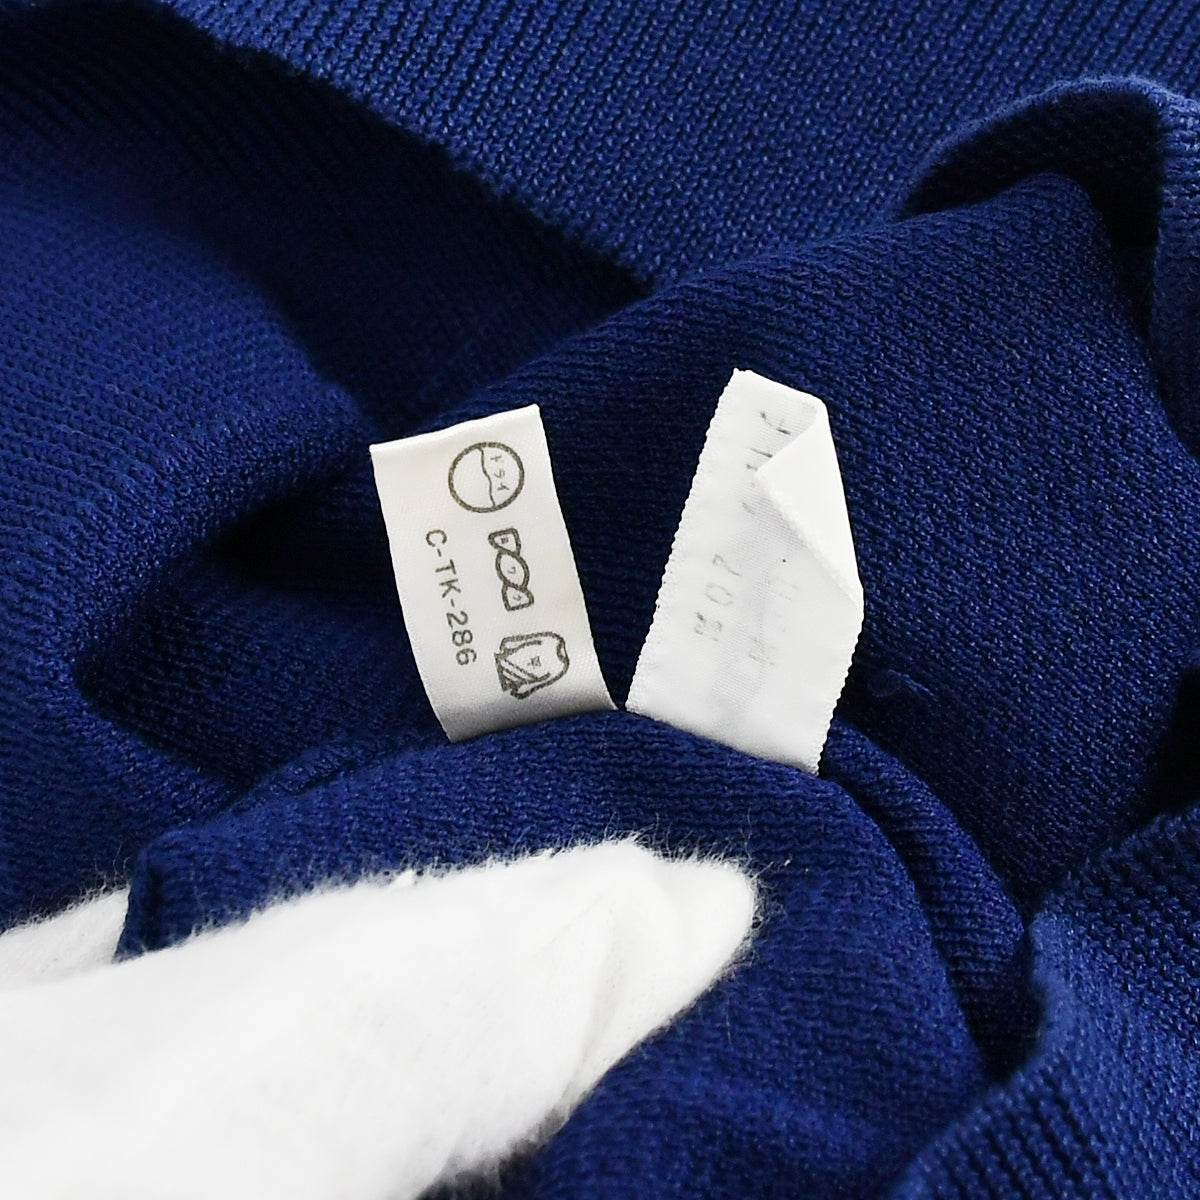 Christian Dior 1980s T-shirt Tops Blue 